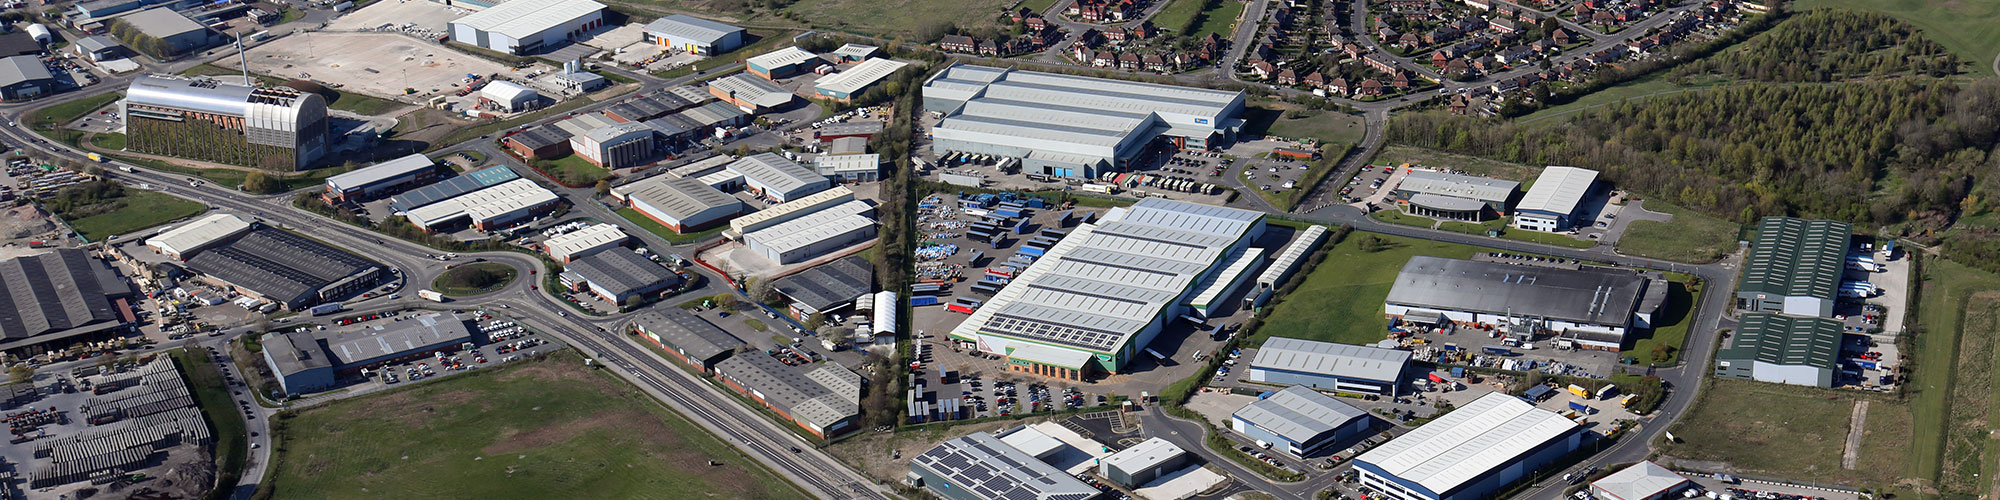 Aerial view of Wrexham industrial estate